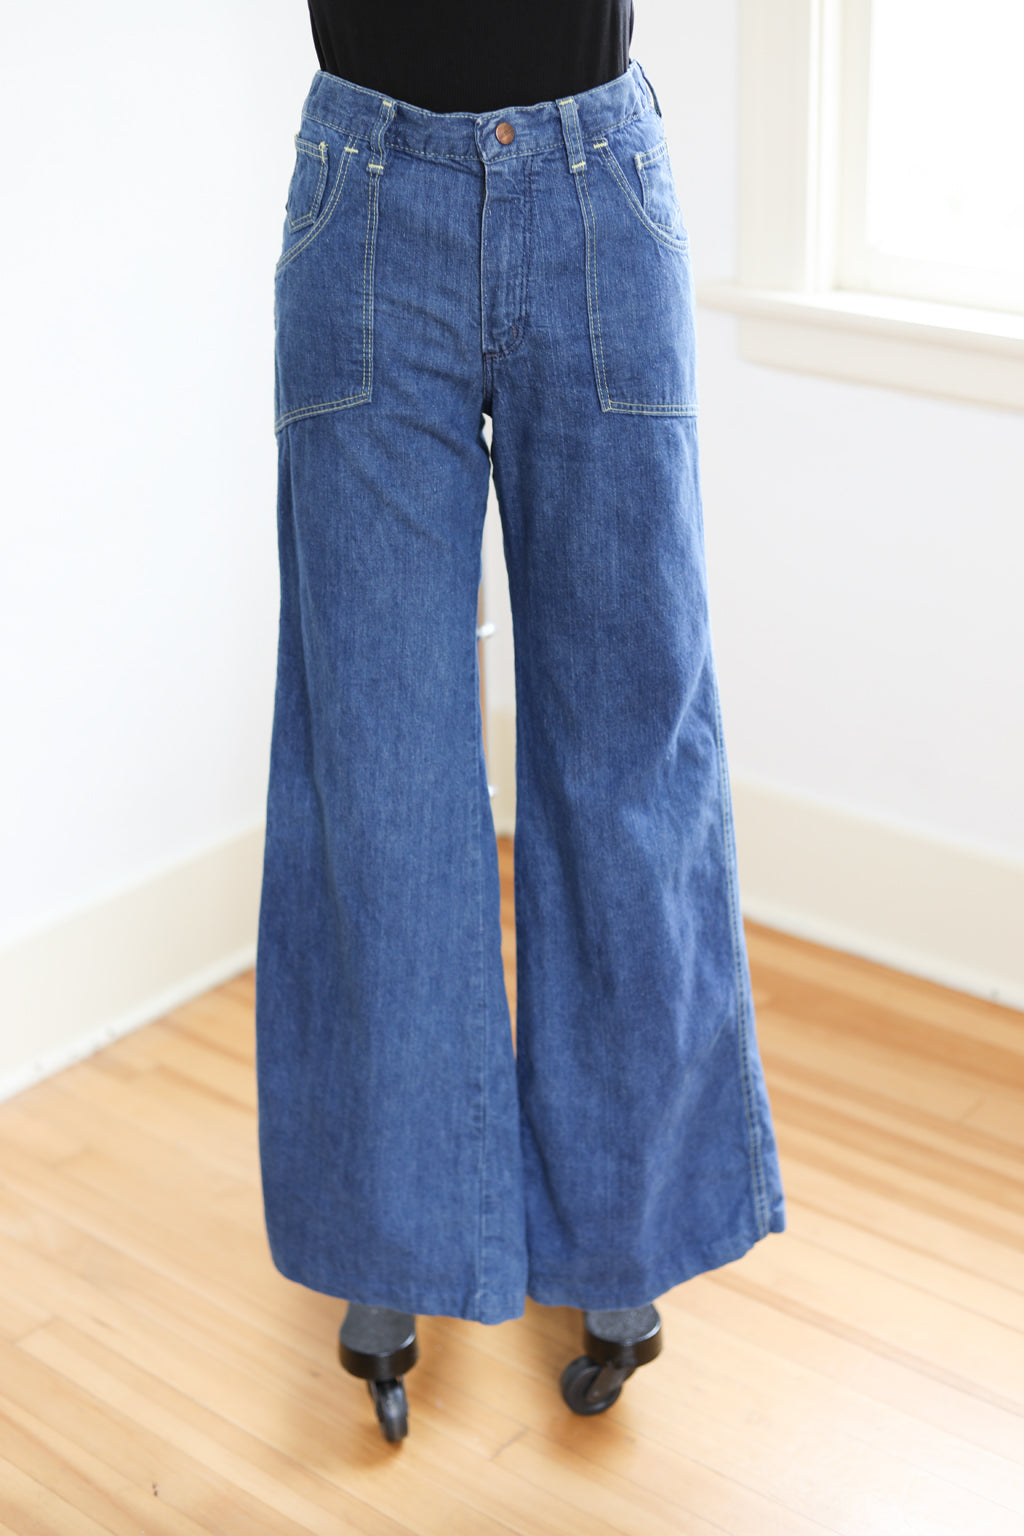 Vintage 1970s Medium Wash Denim Jeans - MAVERICK Booty-Seam Wide Mega Bell Bottoms W28/29"